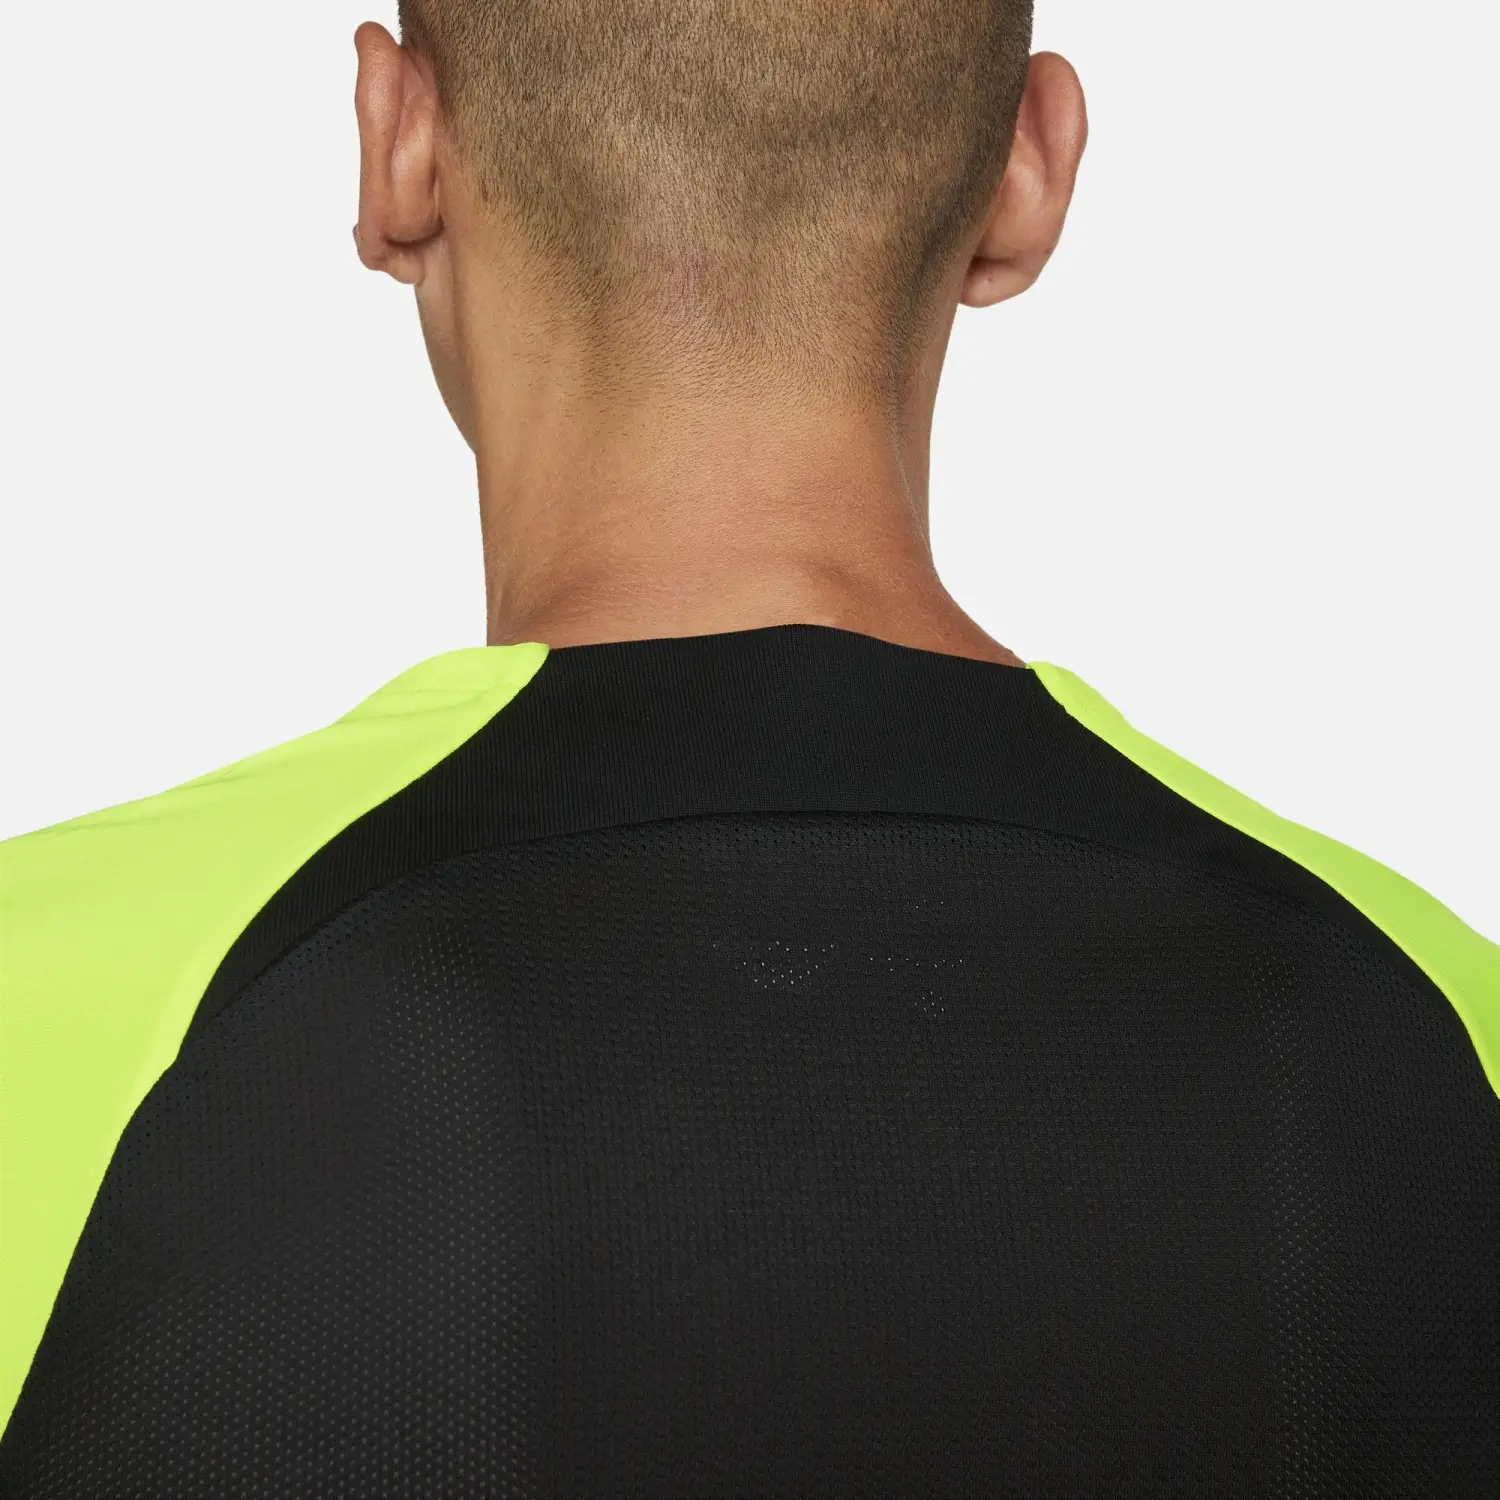  Nike Dri-FIT Academy Pro Siyah Erkek Tişörtü  -DH9225-010